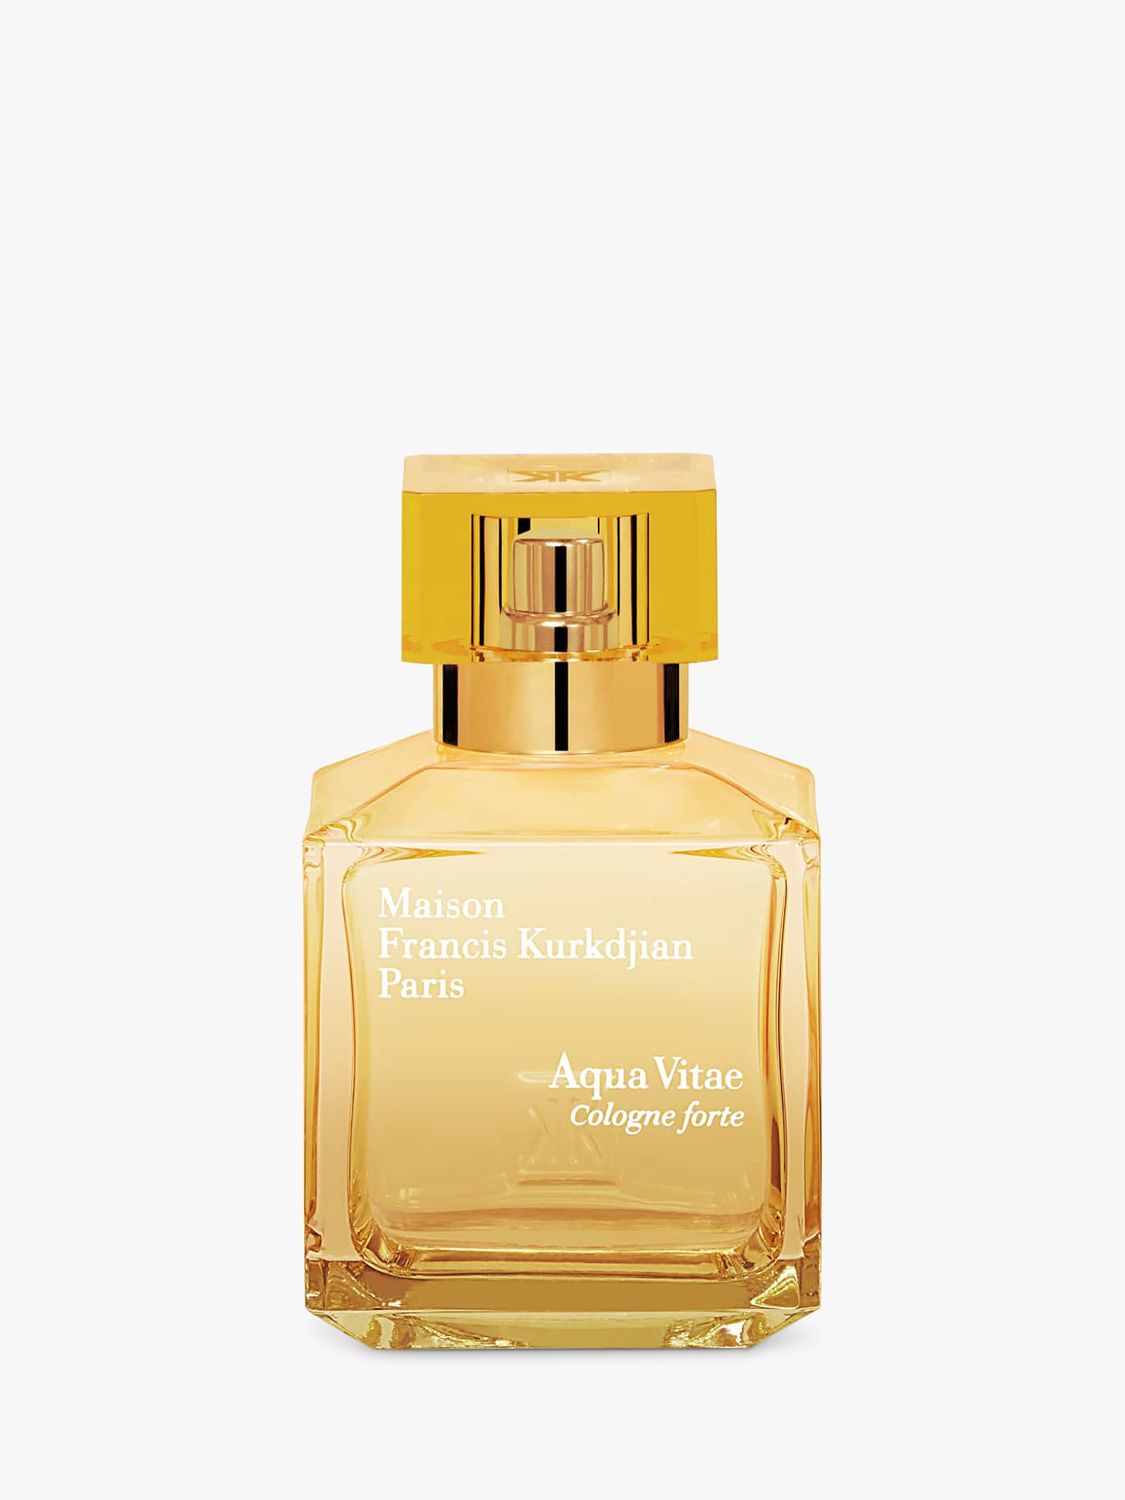 Maison Francis Kurkdjian Aqua Vitae Cologne Forte Eau de Parfum, 70ml